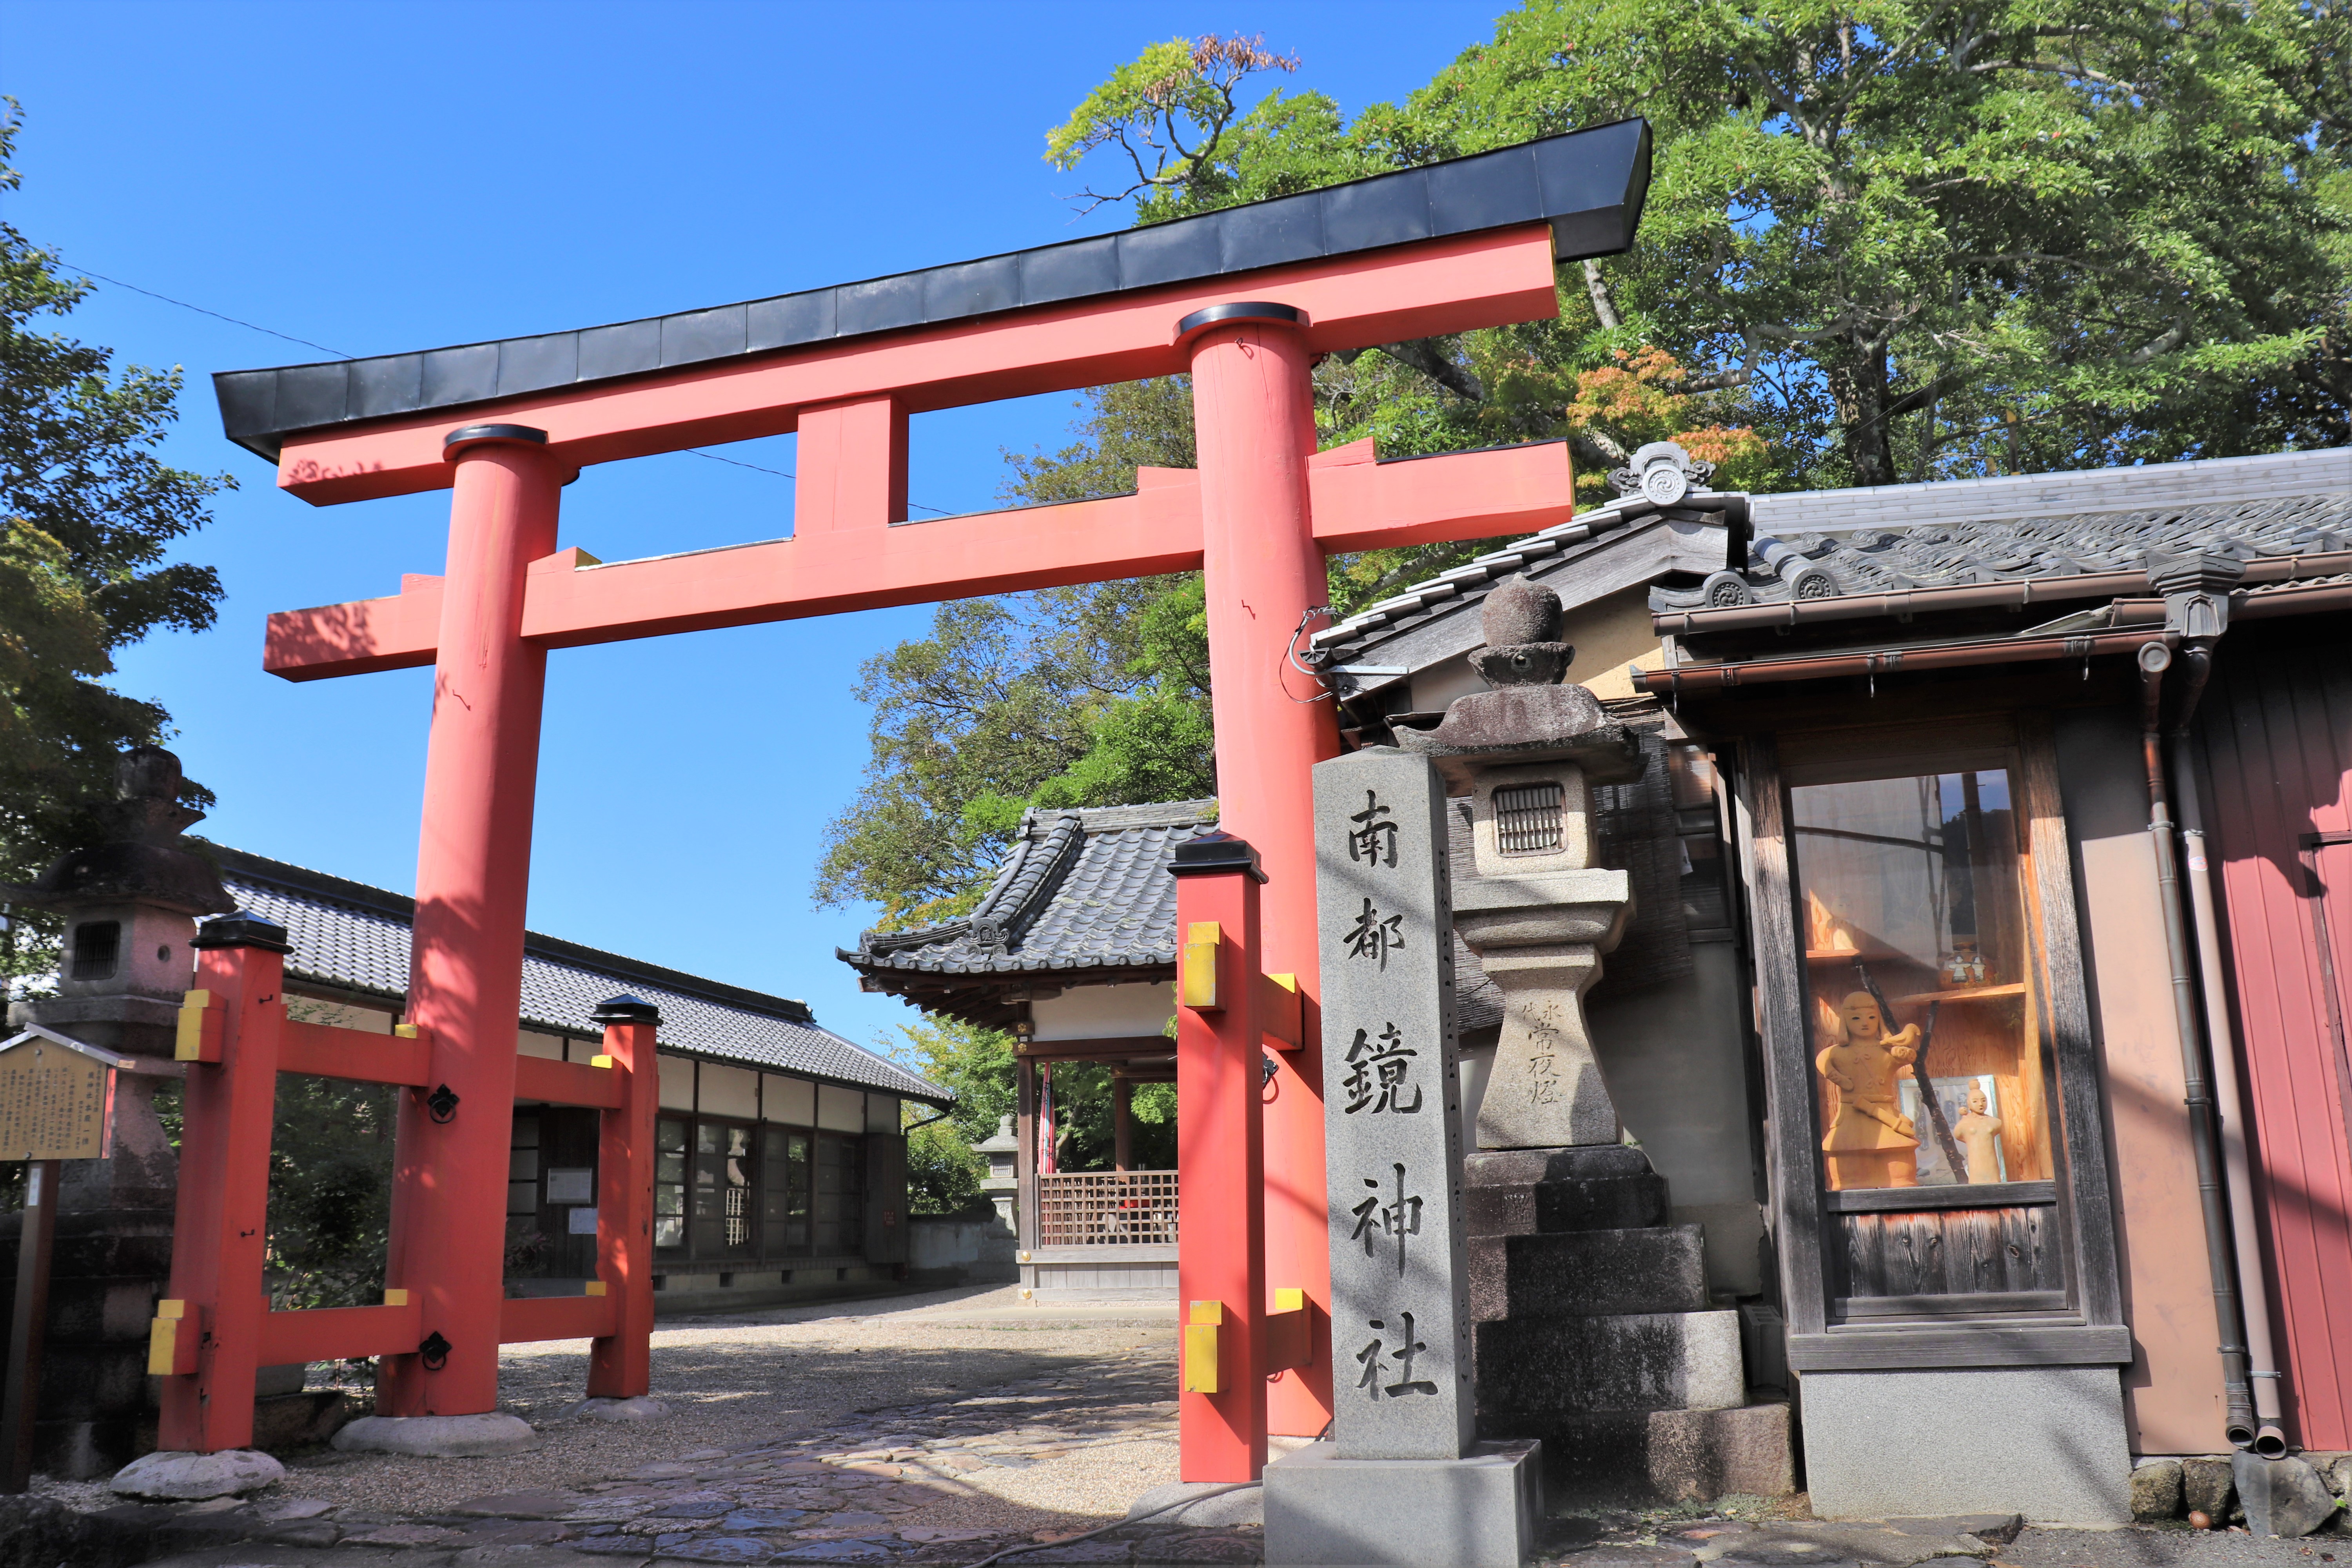 vermillion torii at the entrance of Kagami shrine in nara 